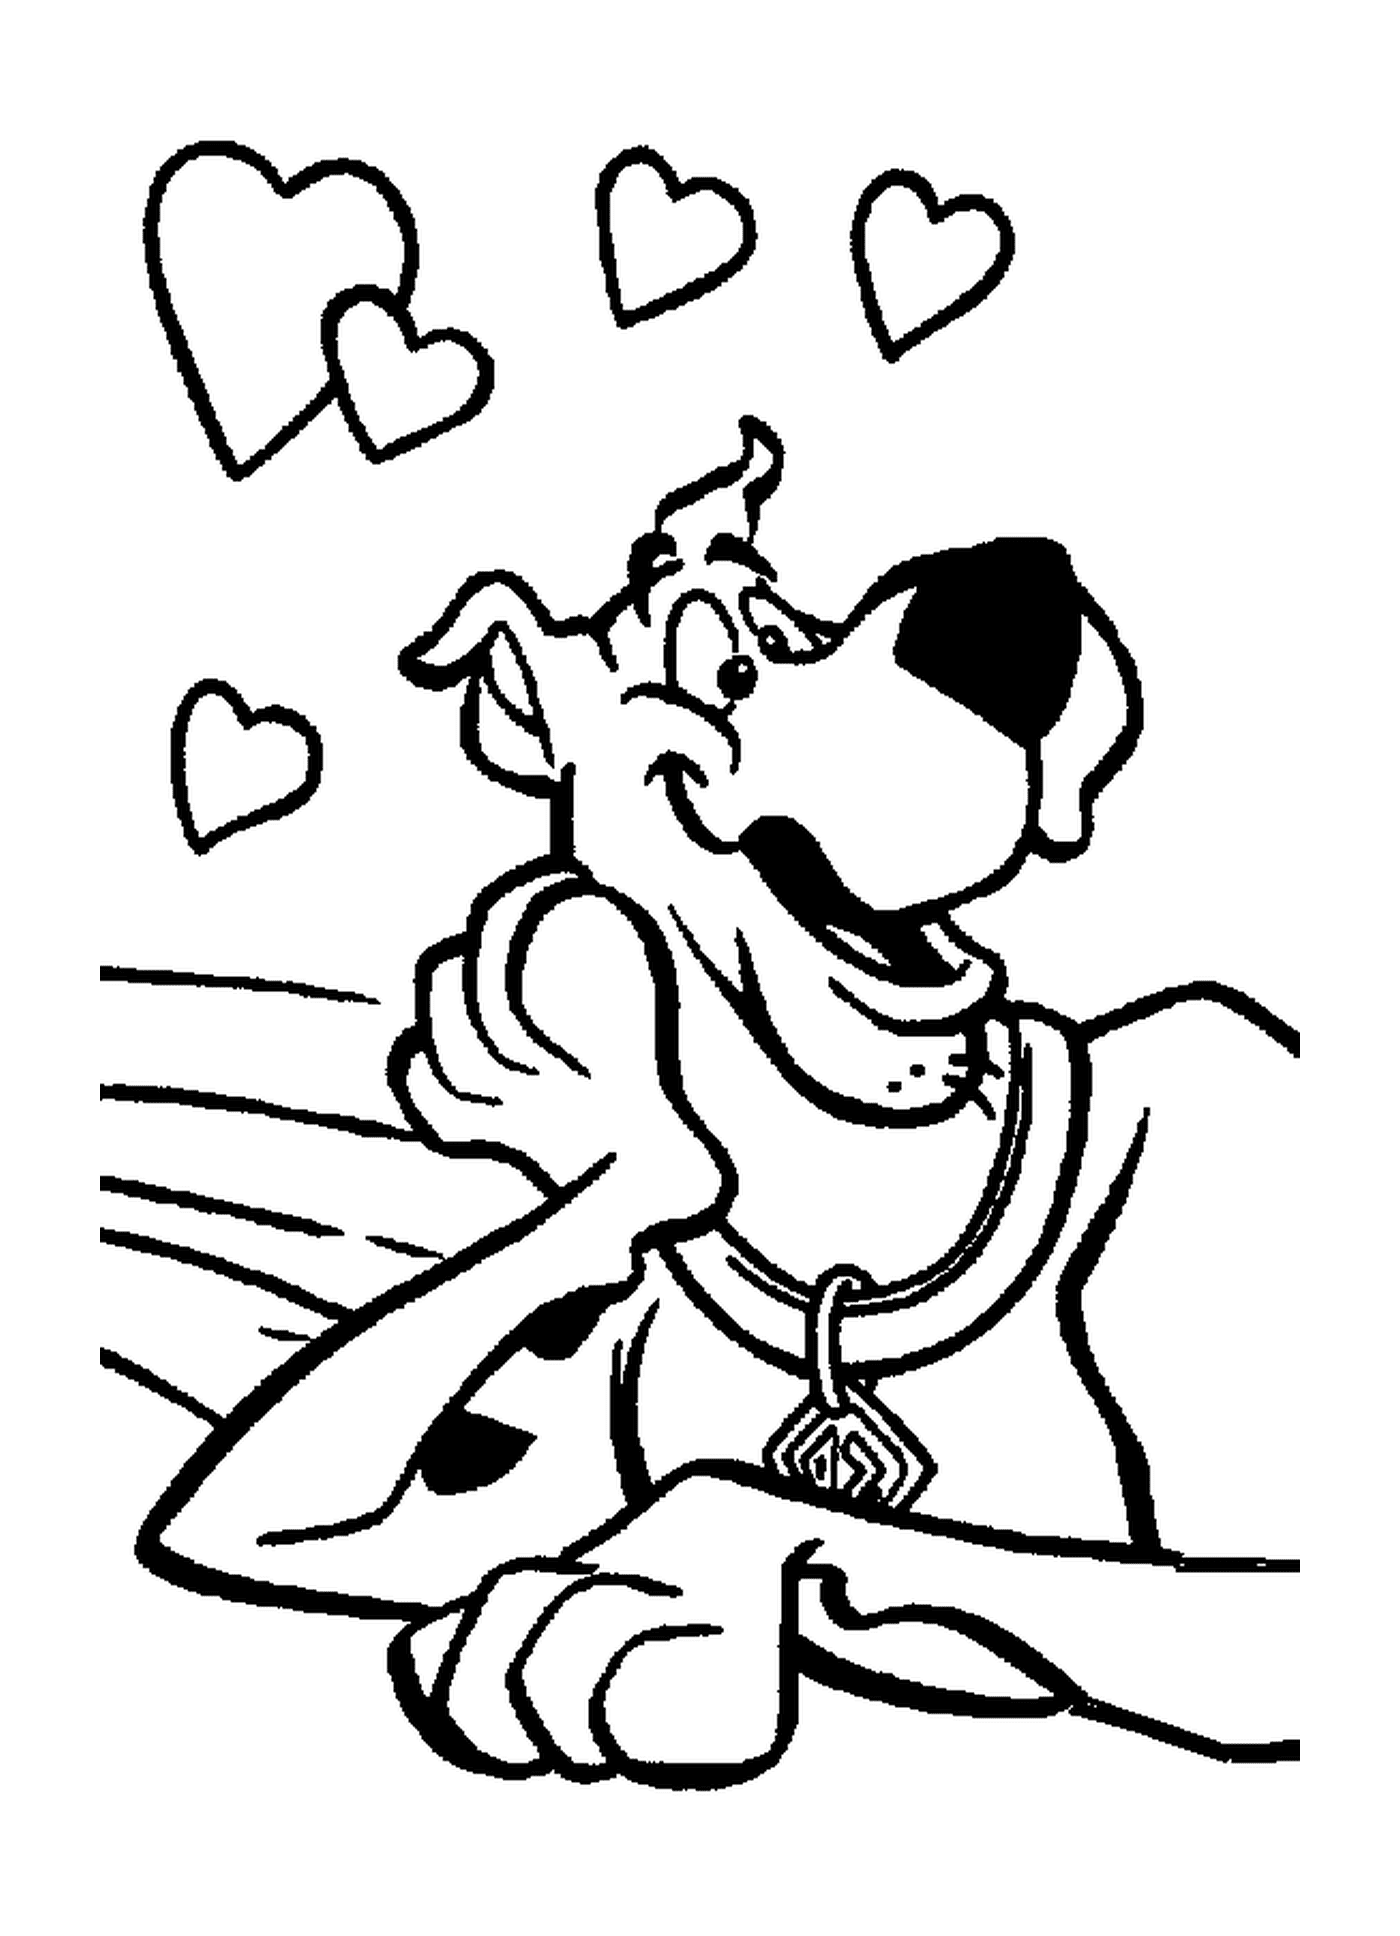  Scooby Doo in love Valentine's Day 